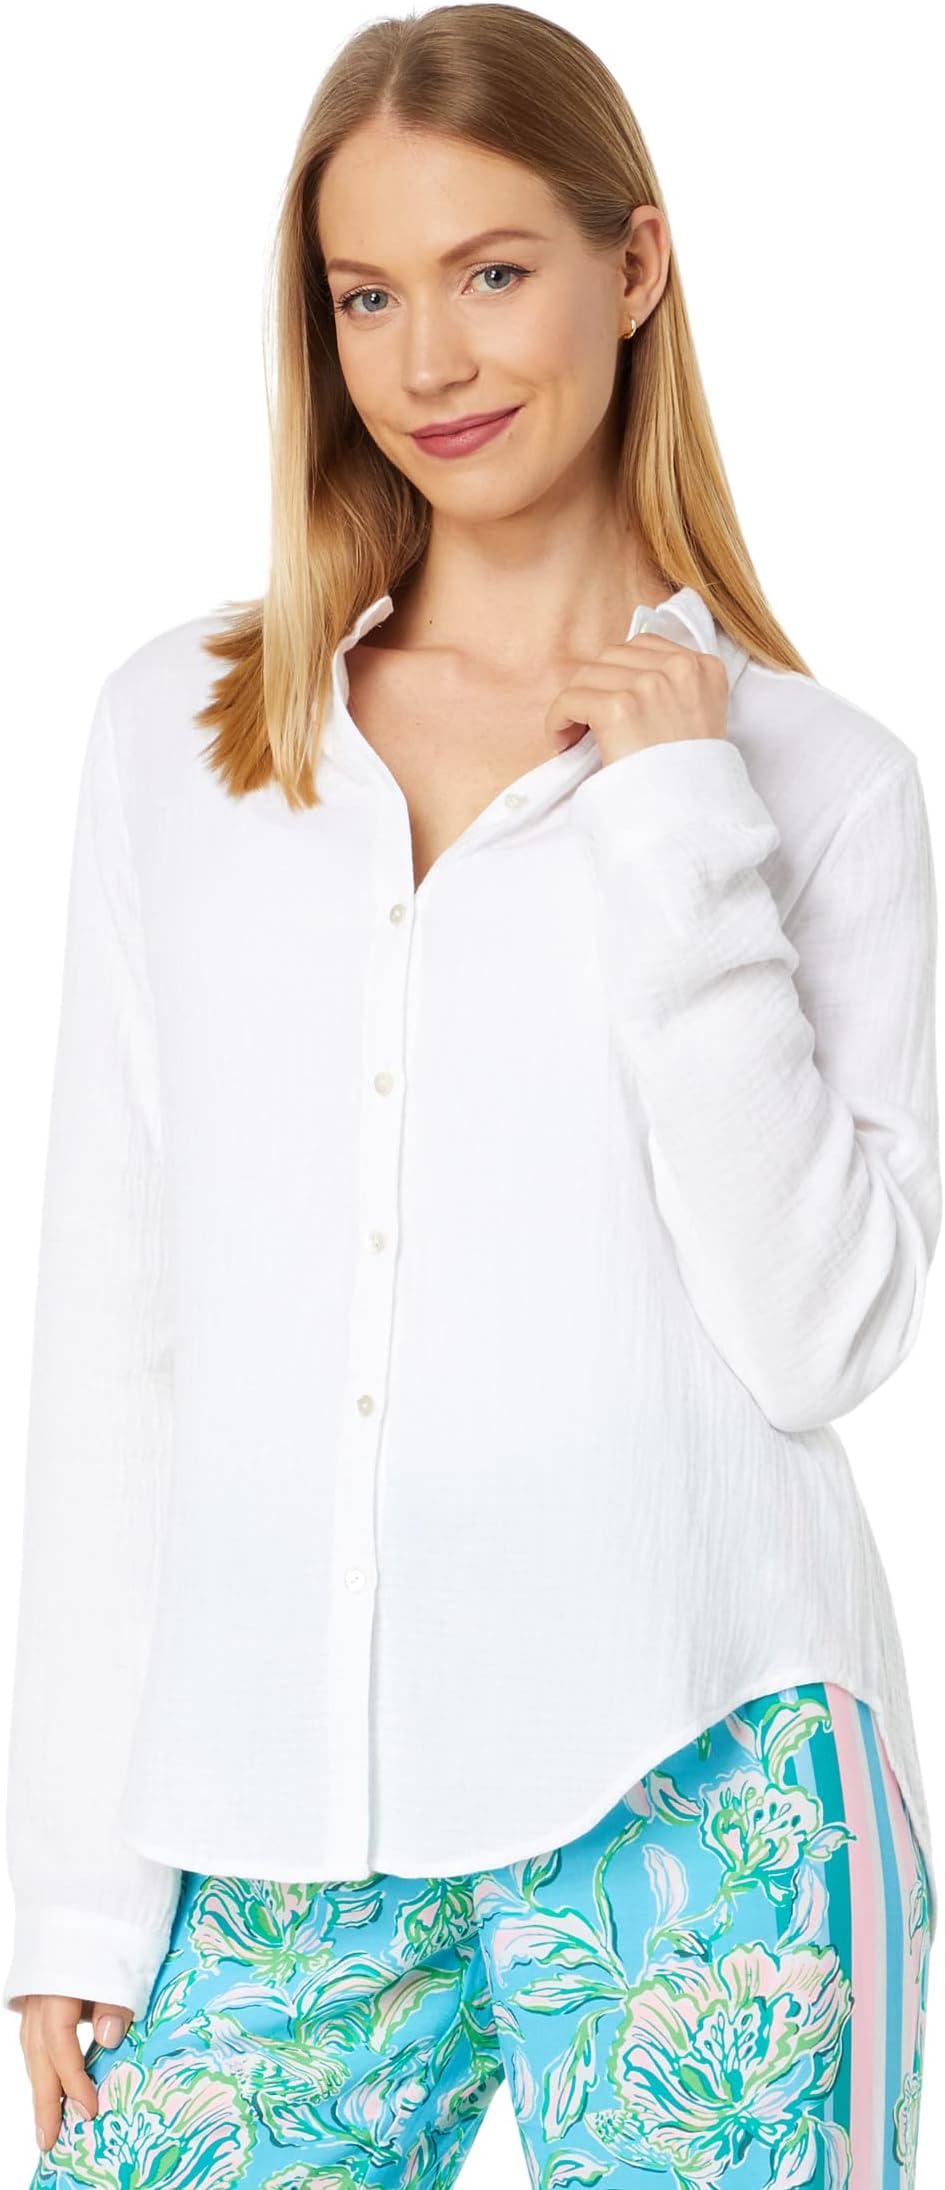 Джинсовая рубашка на пуговицах Lilly Pulitzer, цвет Resort White baron resort